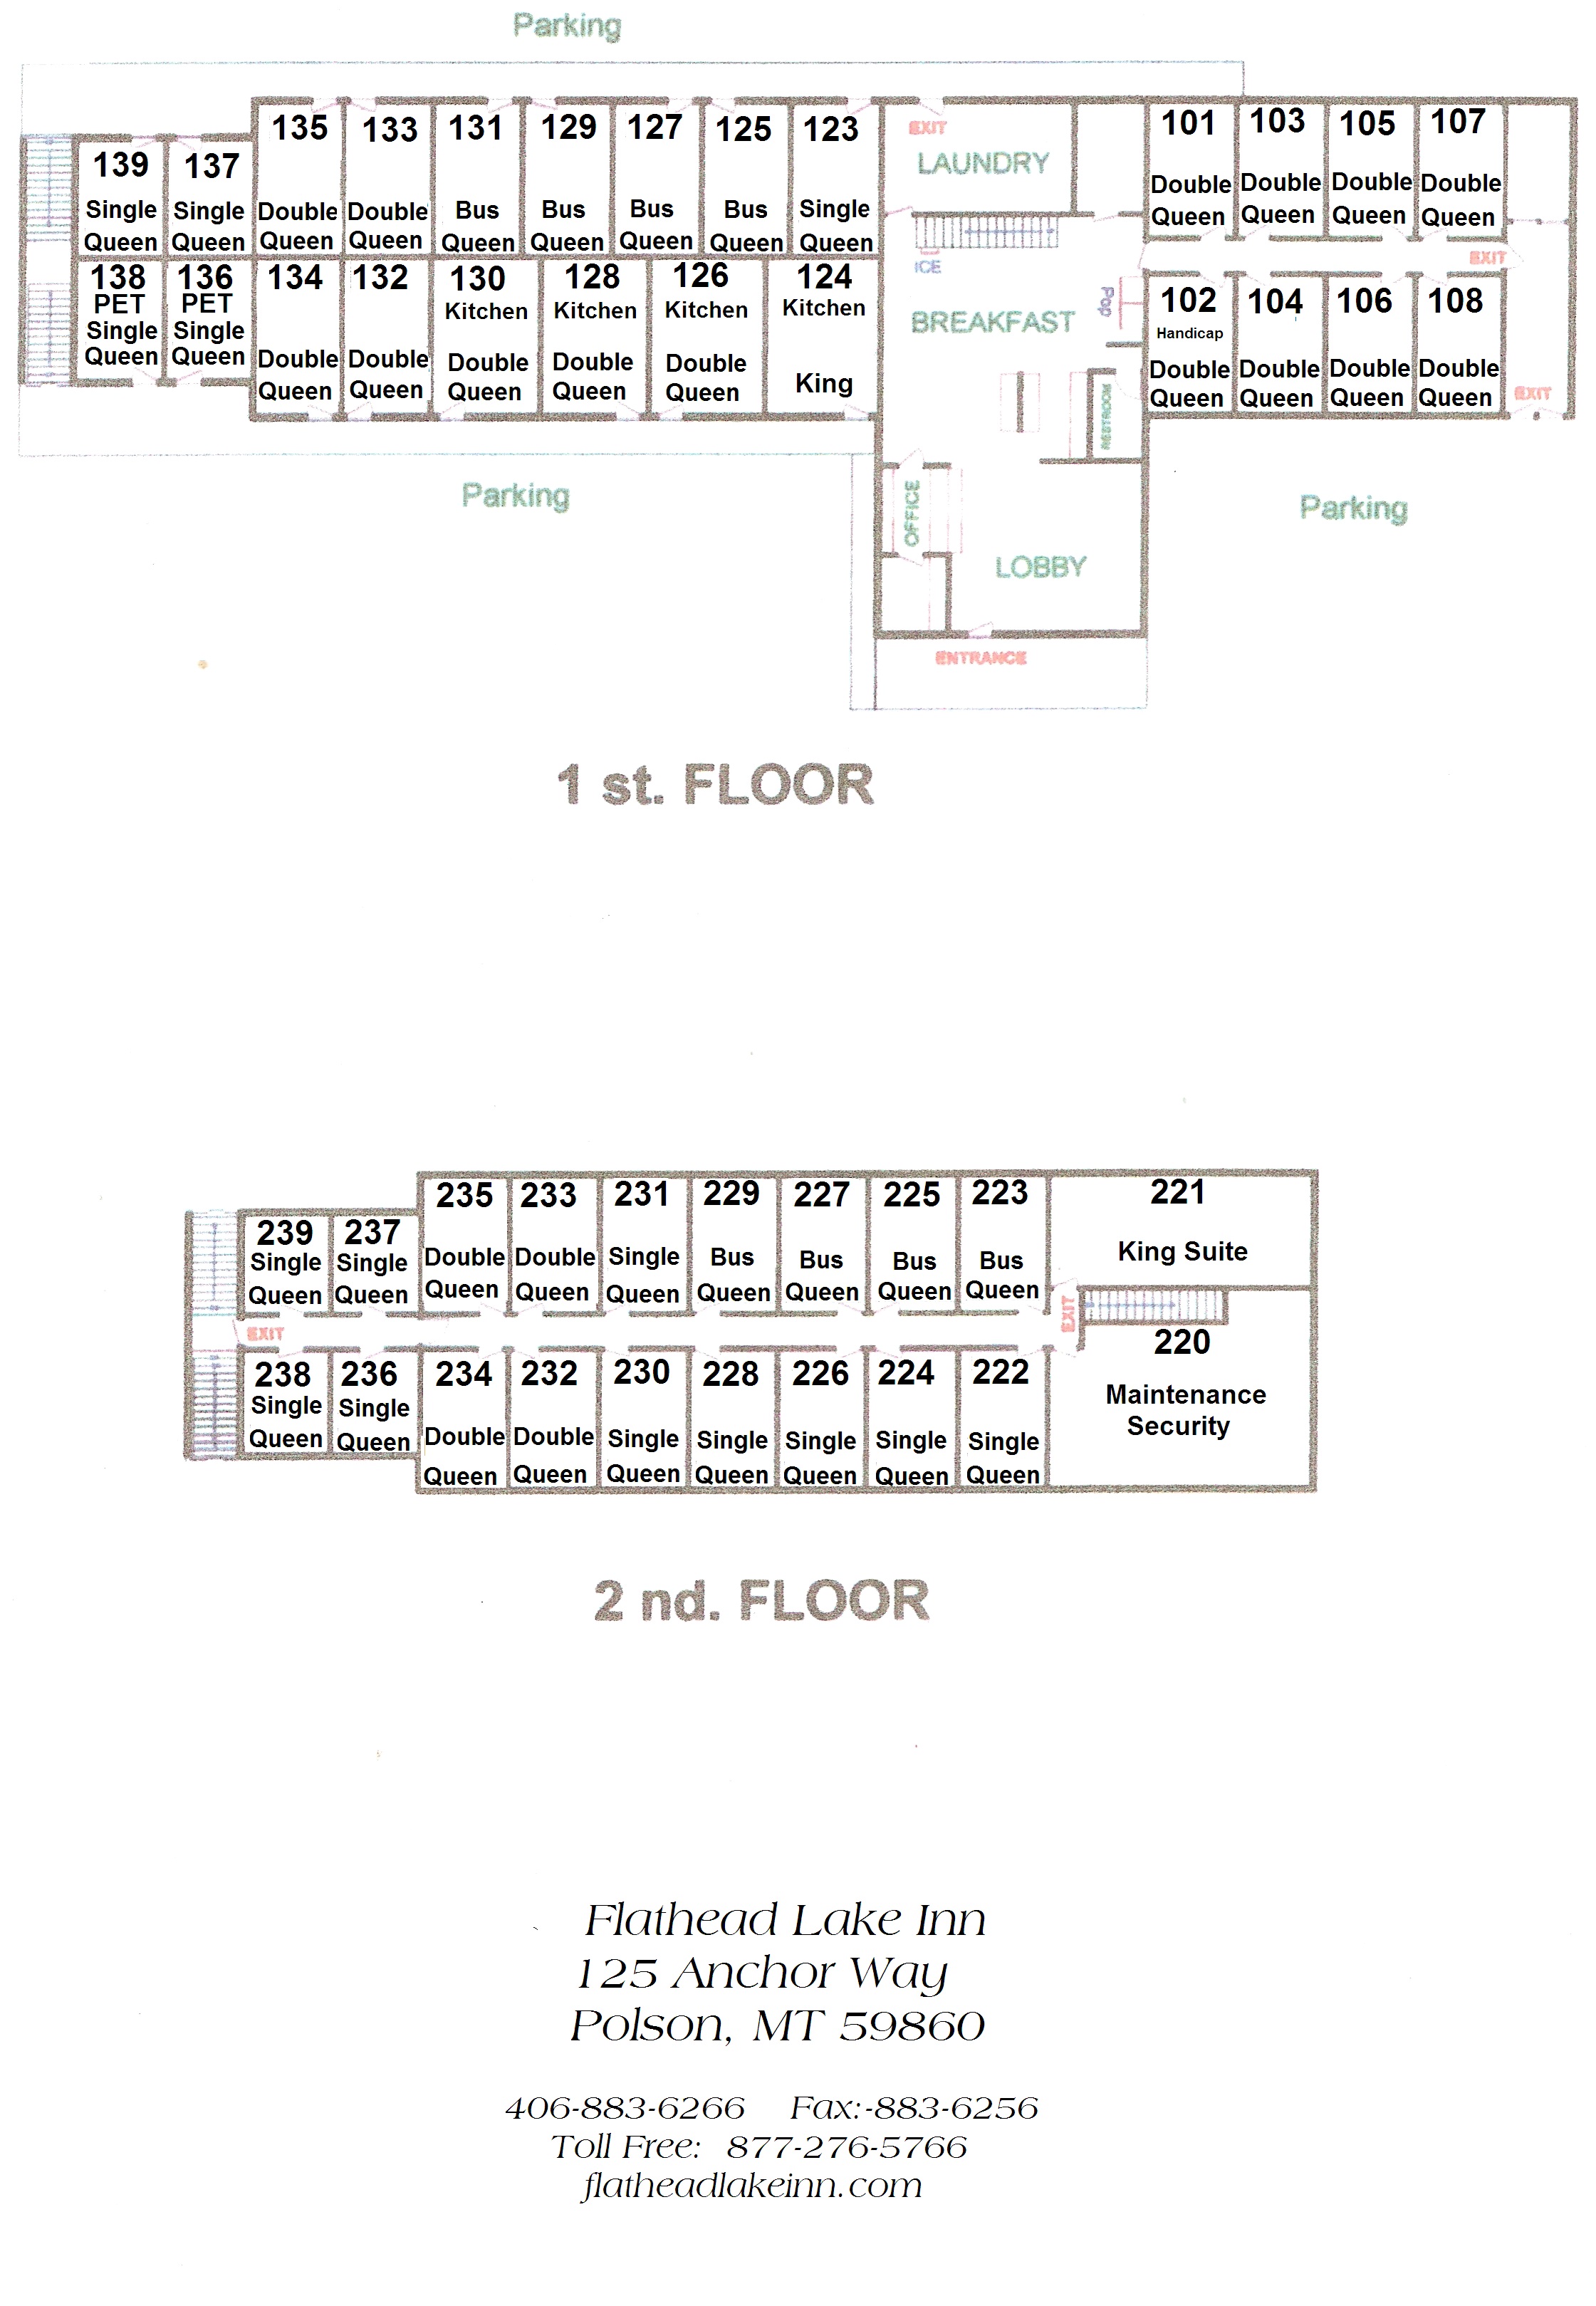 Facility Map of Flathead Lake Inn